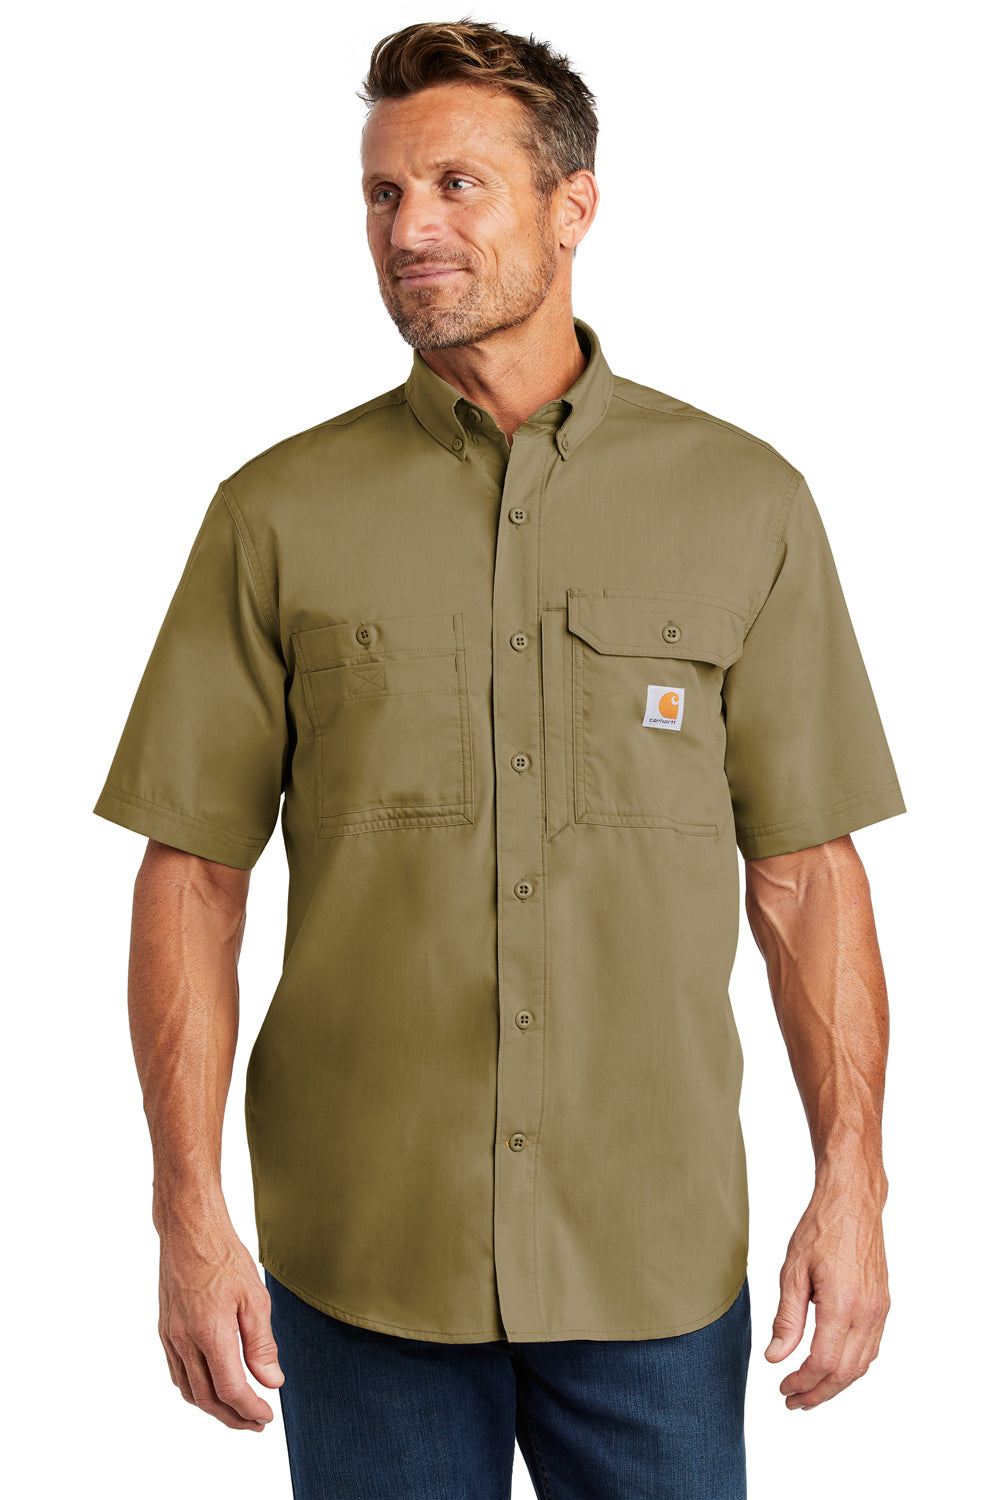 Carhartt CT102417 Mens Force Ridgefield Moisture Wicking Short Sleeve Button Down Shirt w/ Double Pockets Khaki Brown Front